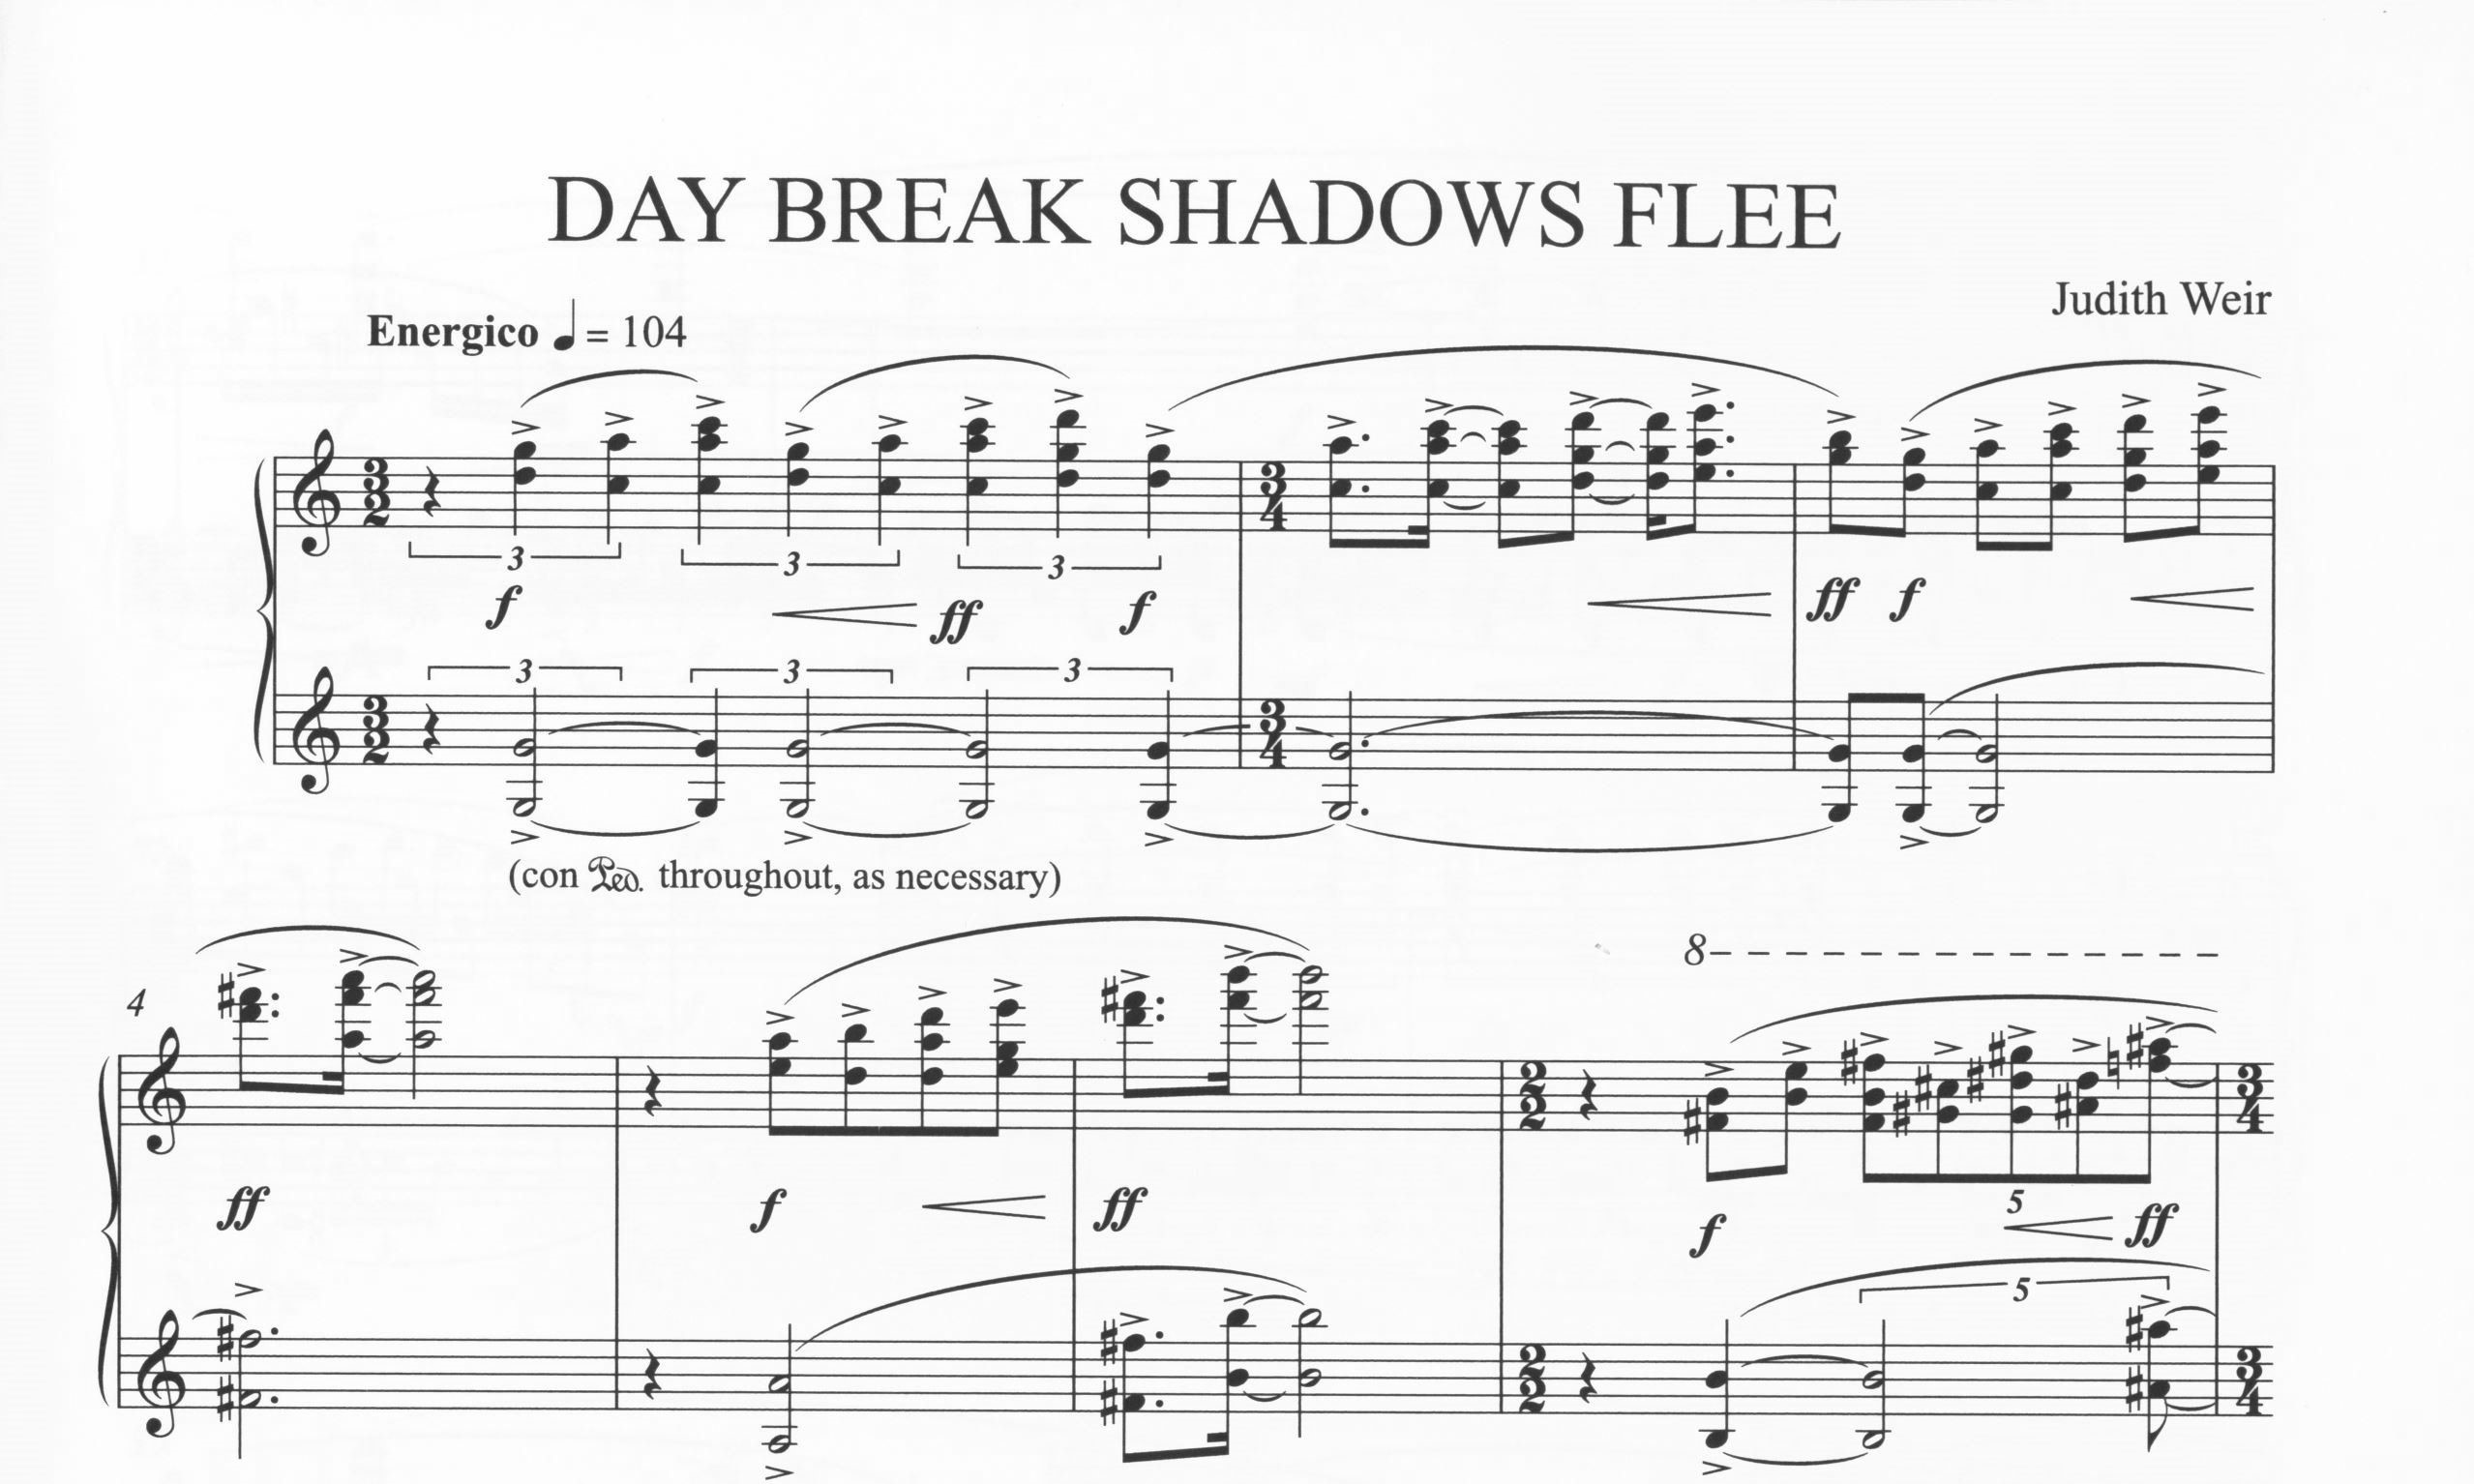 Day Break Shadows Flee - Judith Weir